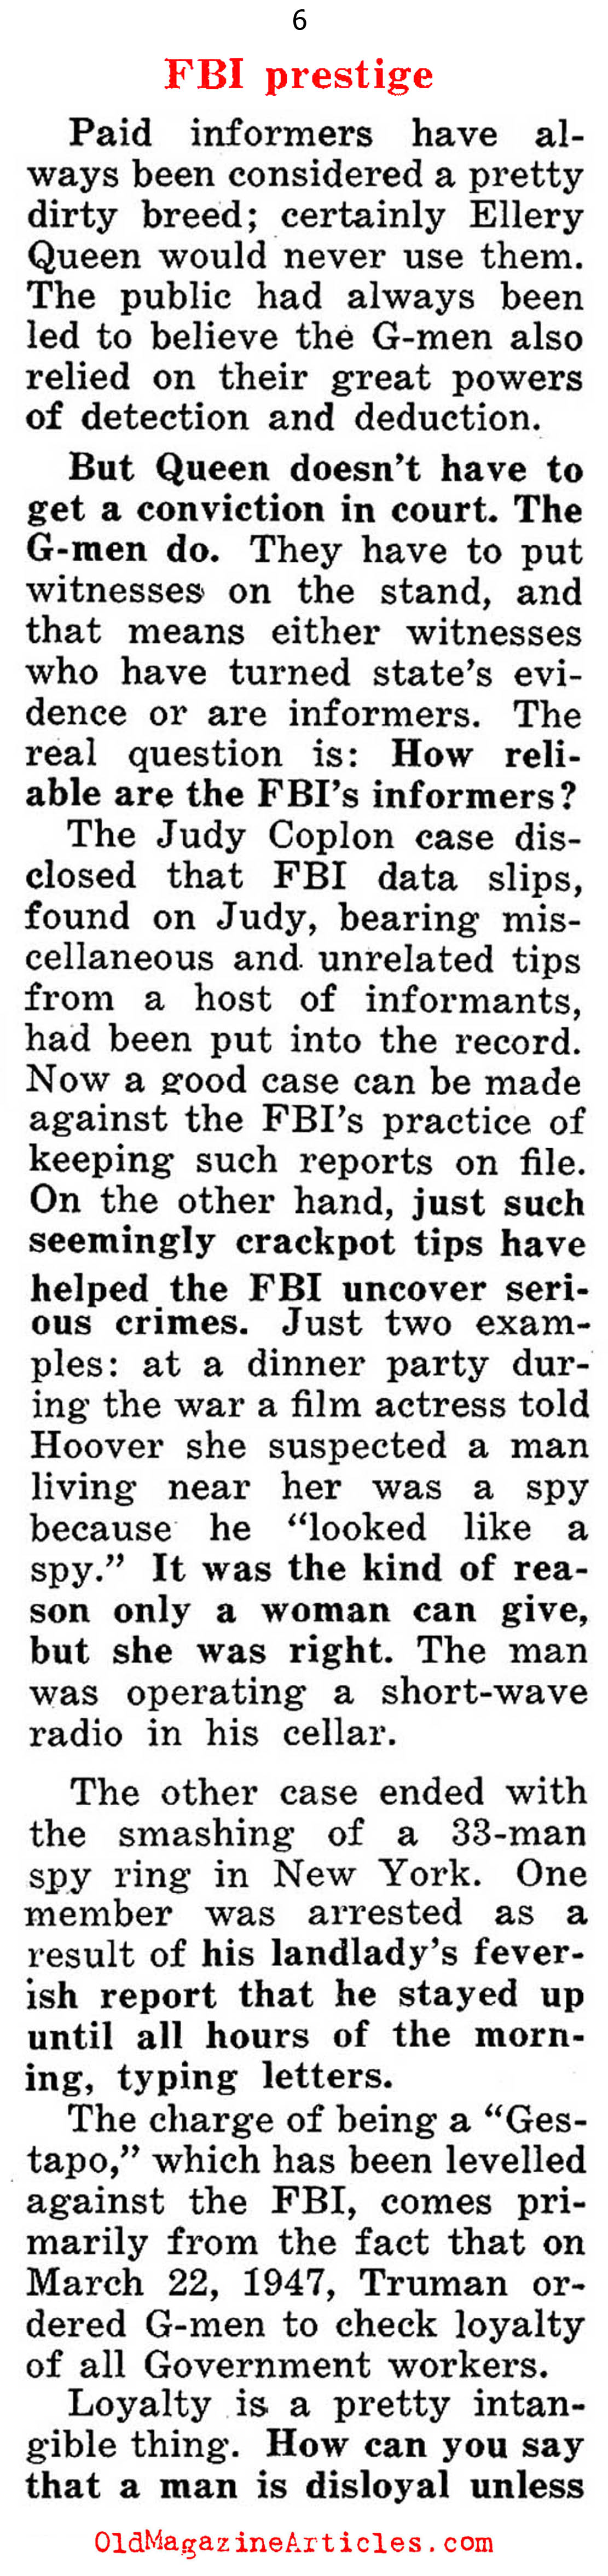 The Damaged Prestige of the FBI (Quick Magazine, 1952)